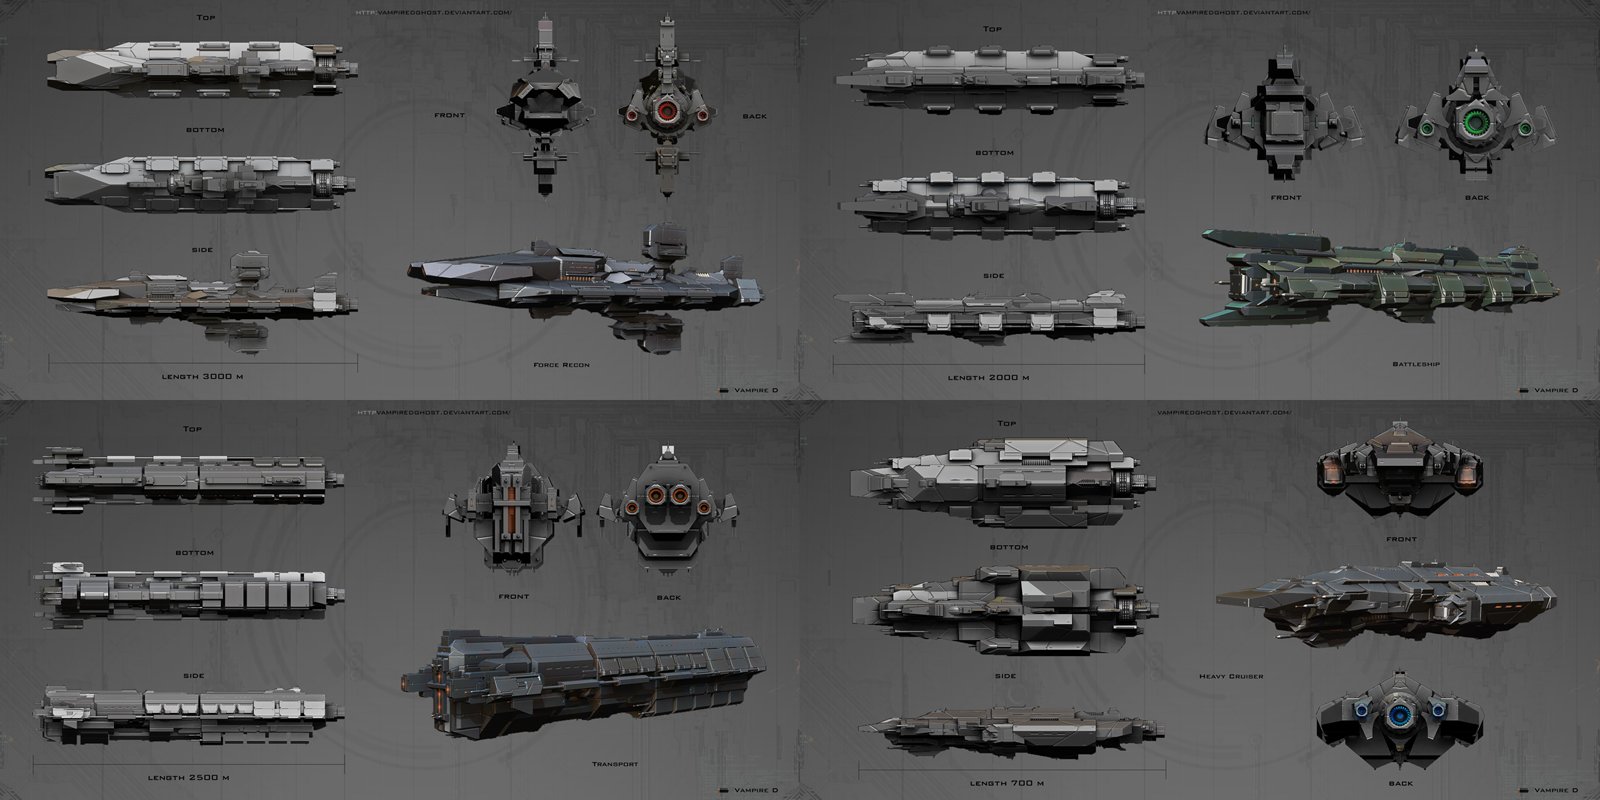 ArtStation - Space ships, stations